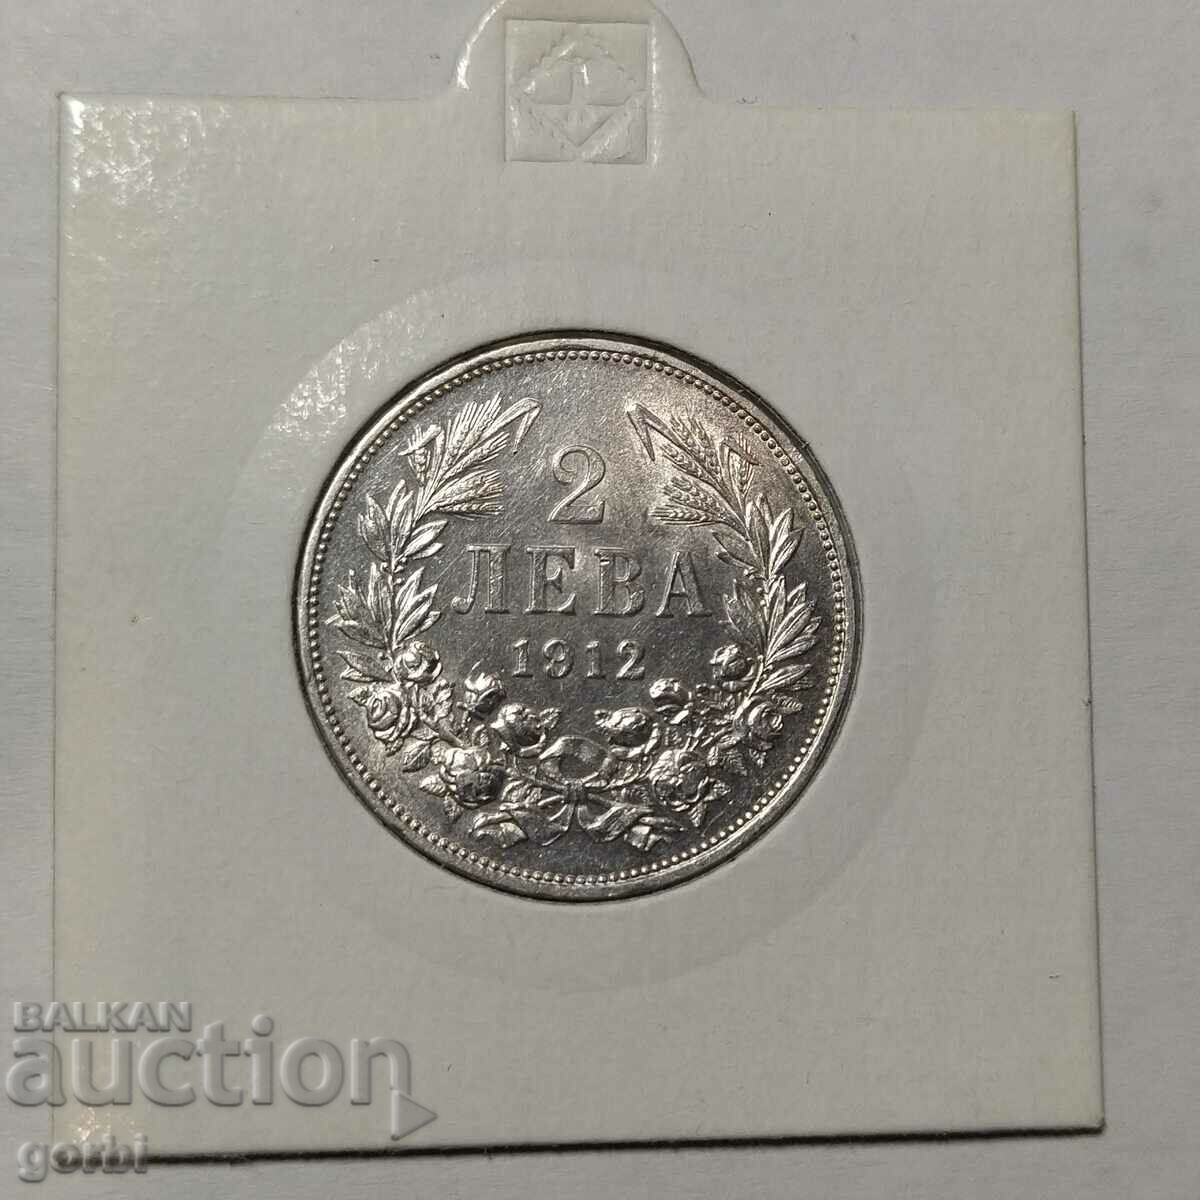 2 BGN 1912. An excellent collector's coin!